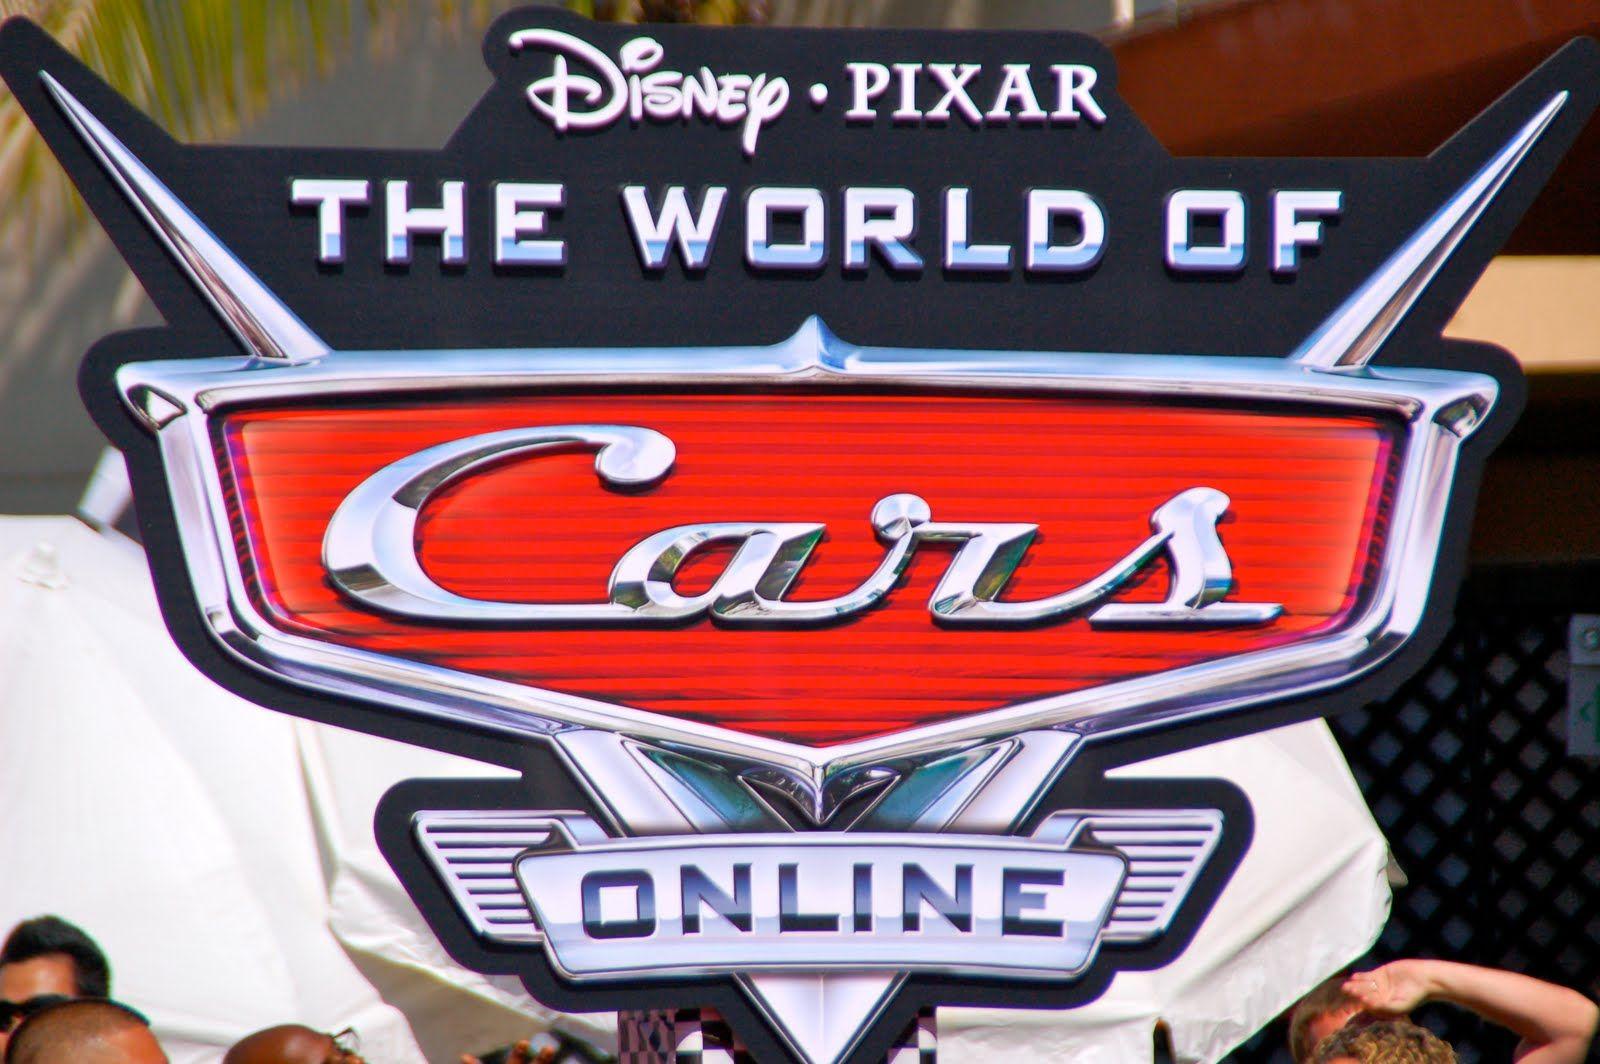 Disney Pixar Cars 1 Logo - Disney Sisters: Disney Pixar Cars Online Event